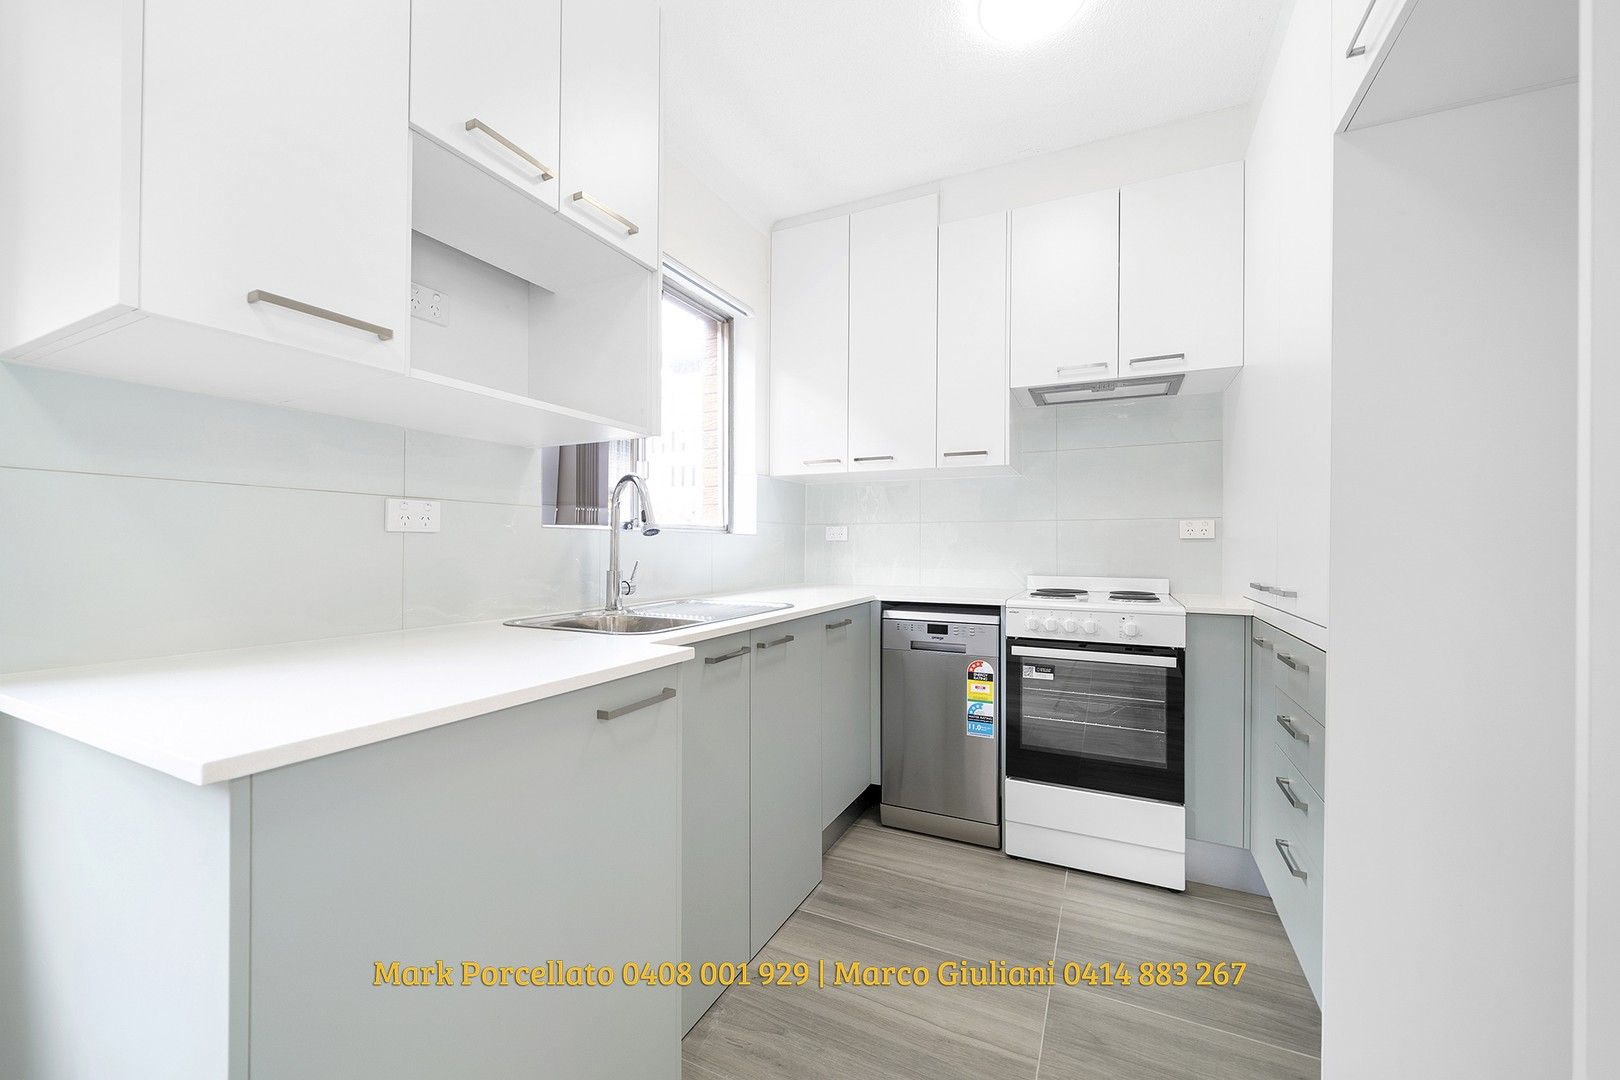 2 bedrooms Apartment / Unit / Flat in 7/44 High Street RANDWICK NSW, 2031